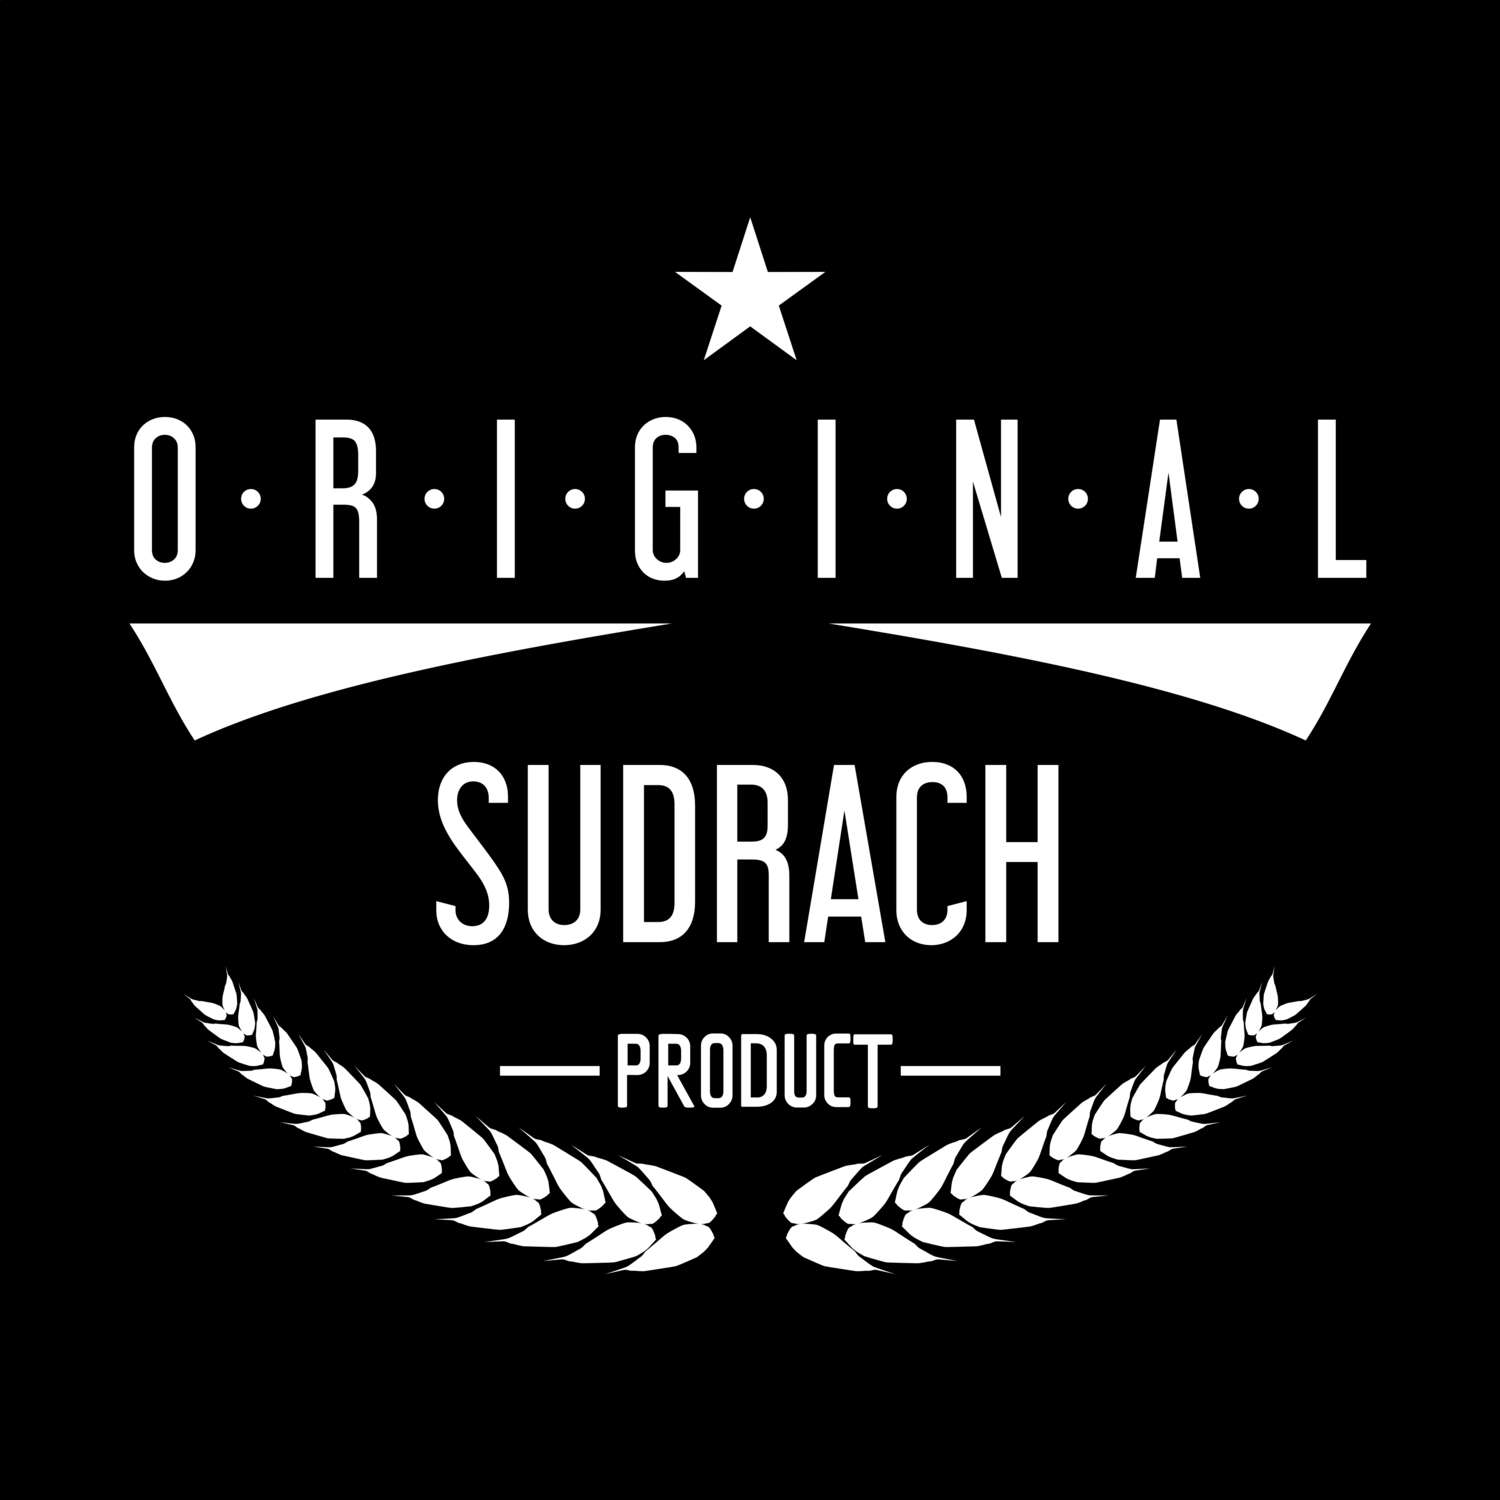 Sudrach T-Shirt »Original Product«